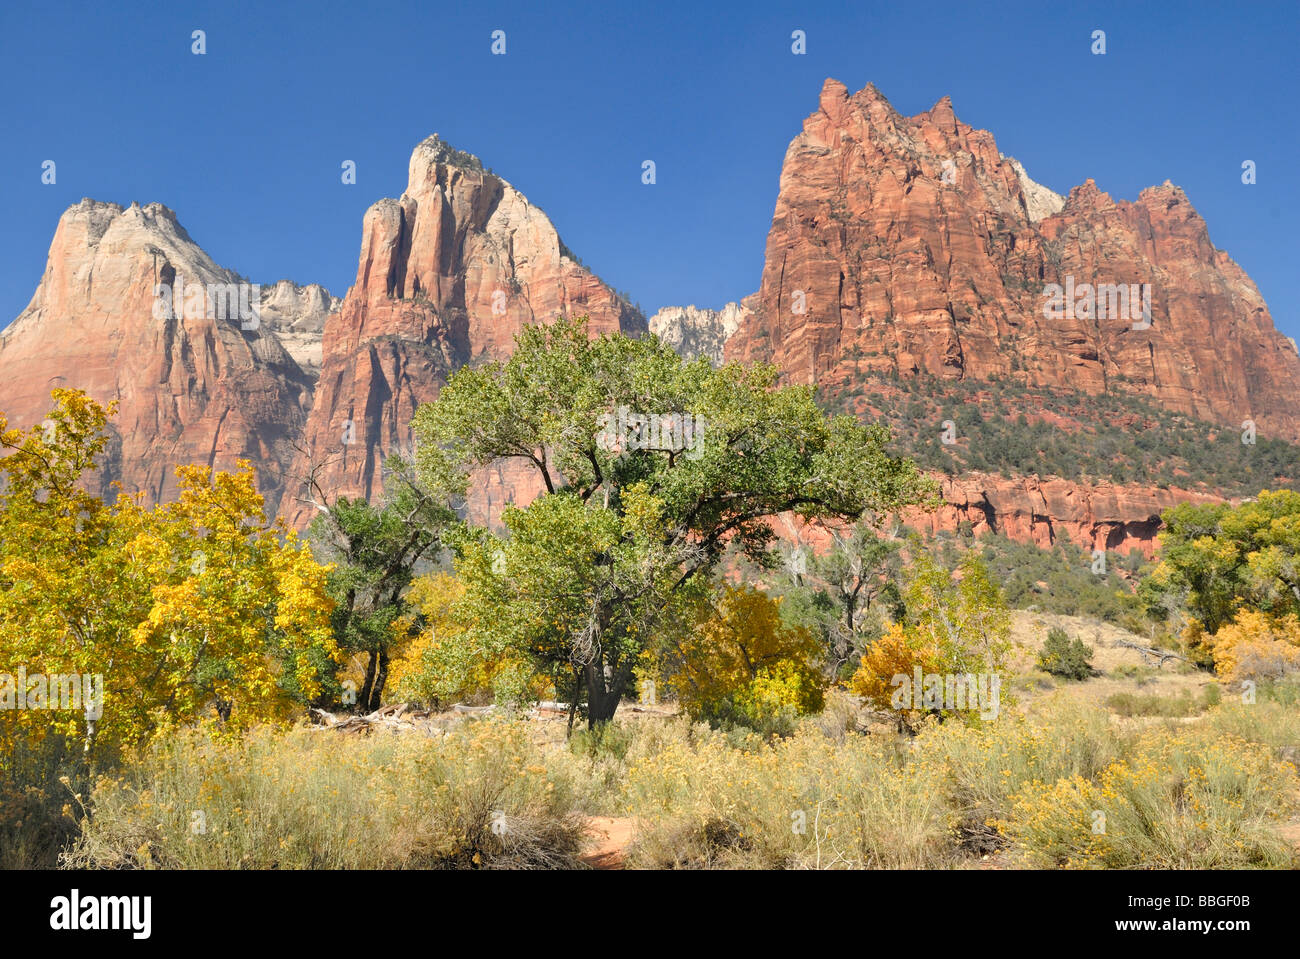 The Patriarchs, left to right: Abraham Peak, Peak Isaac, Jacob Peak, Zion National Park, Utah, USA Stock Photo